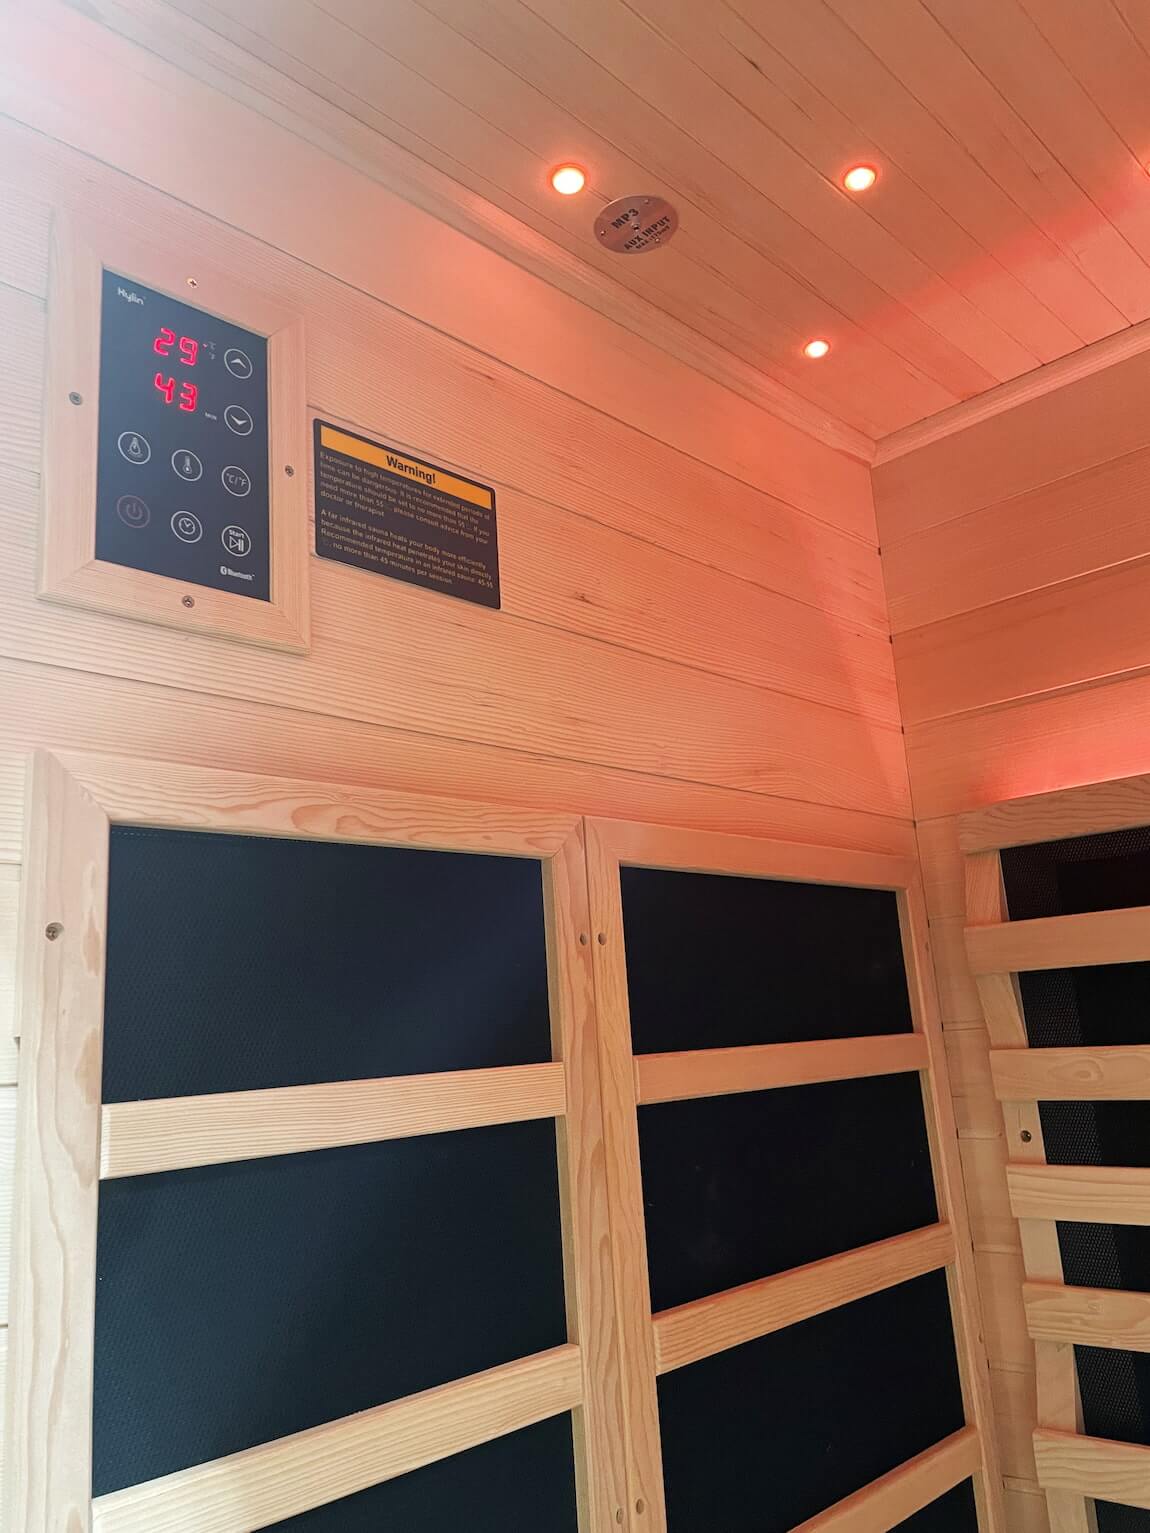 Kylin KY-2P5 2 person infrared sauna